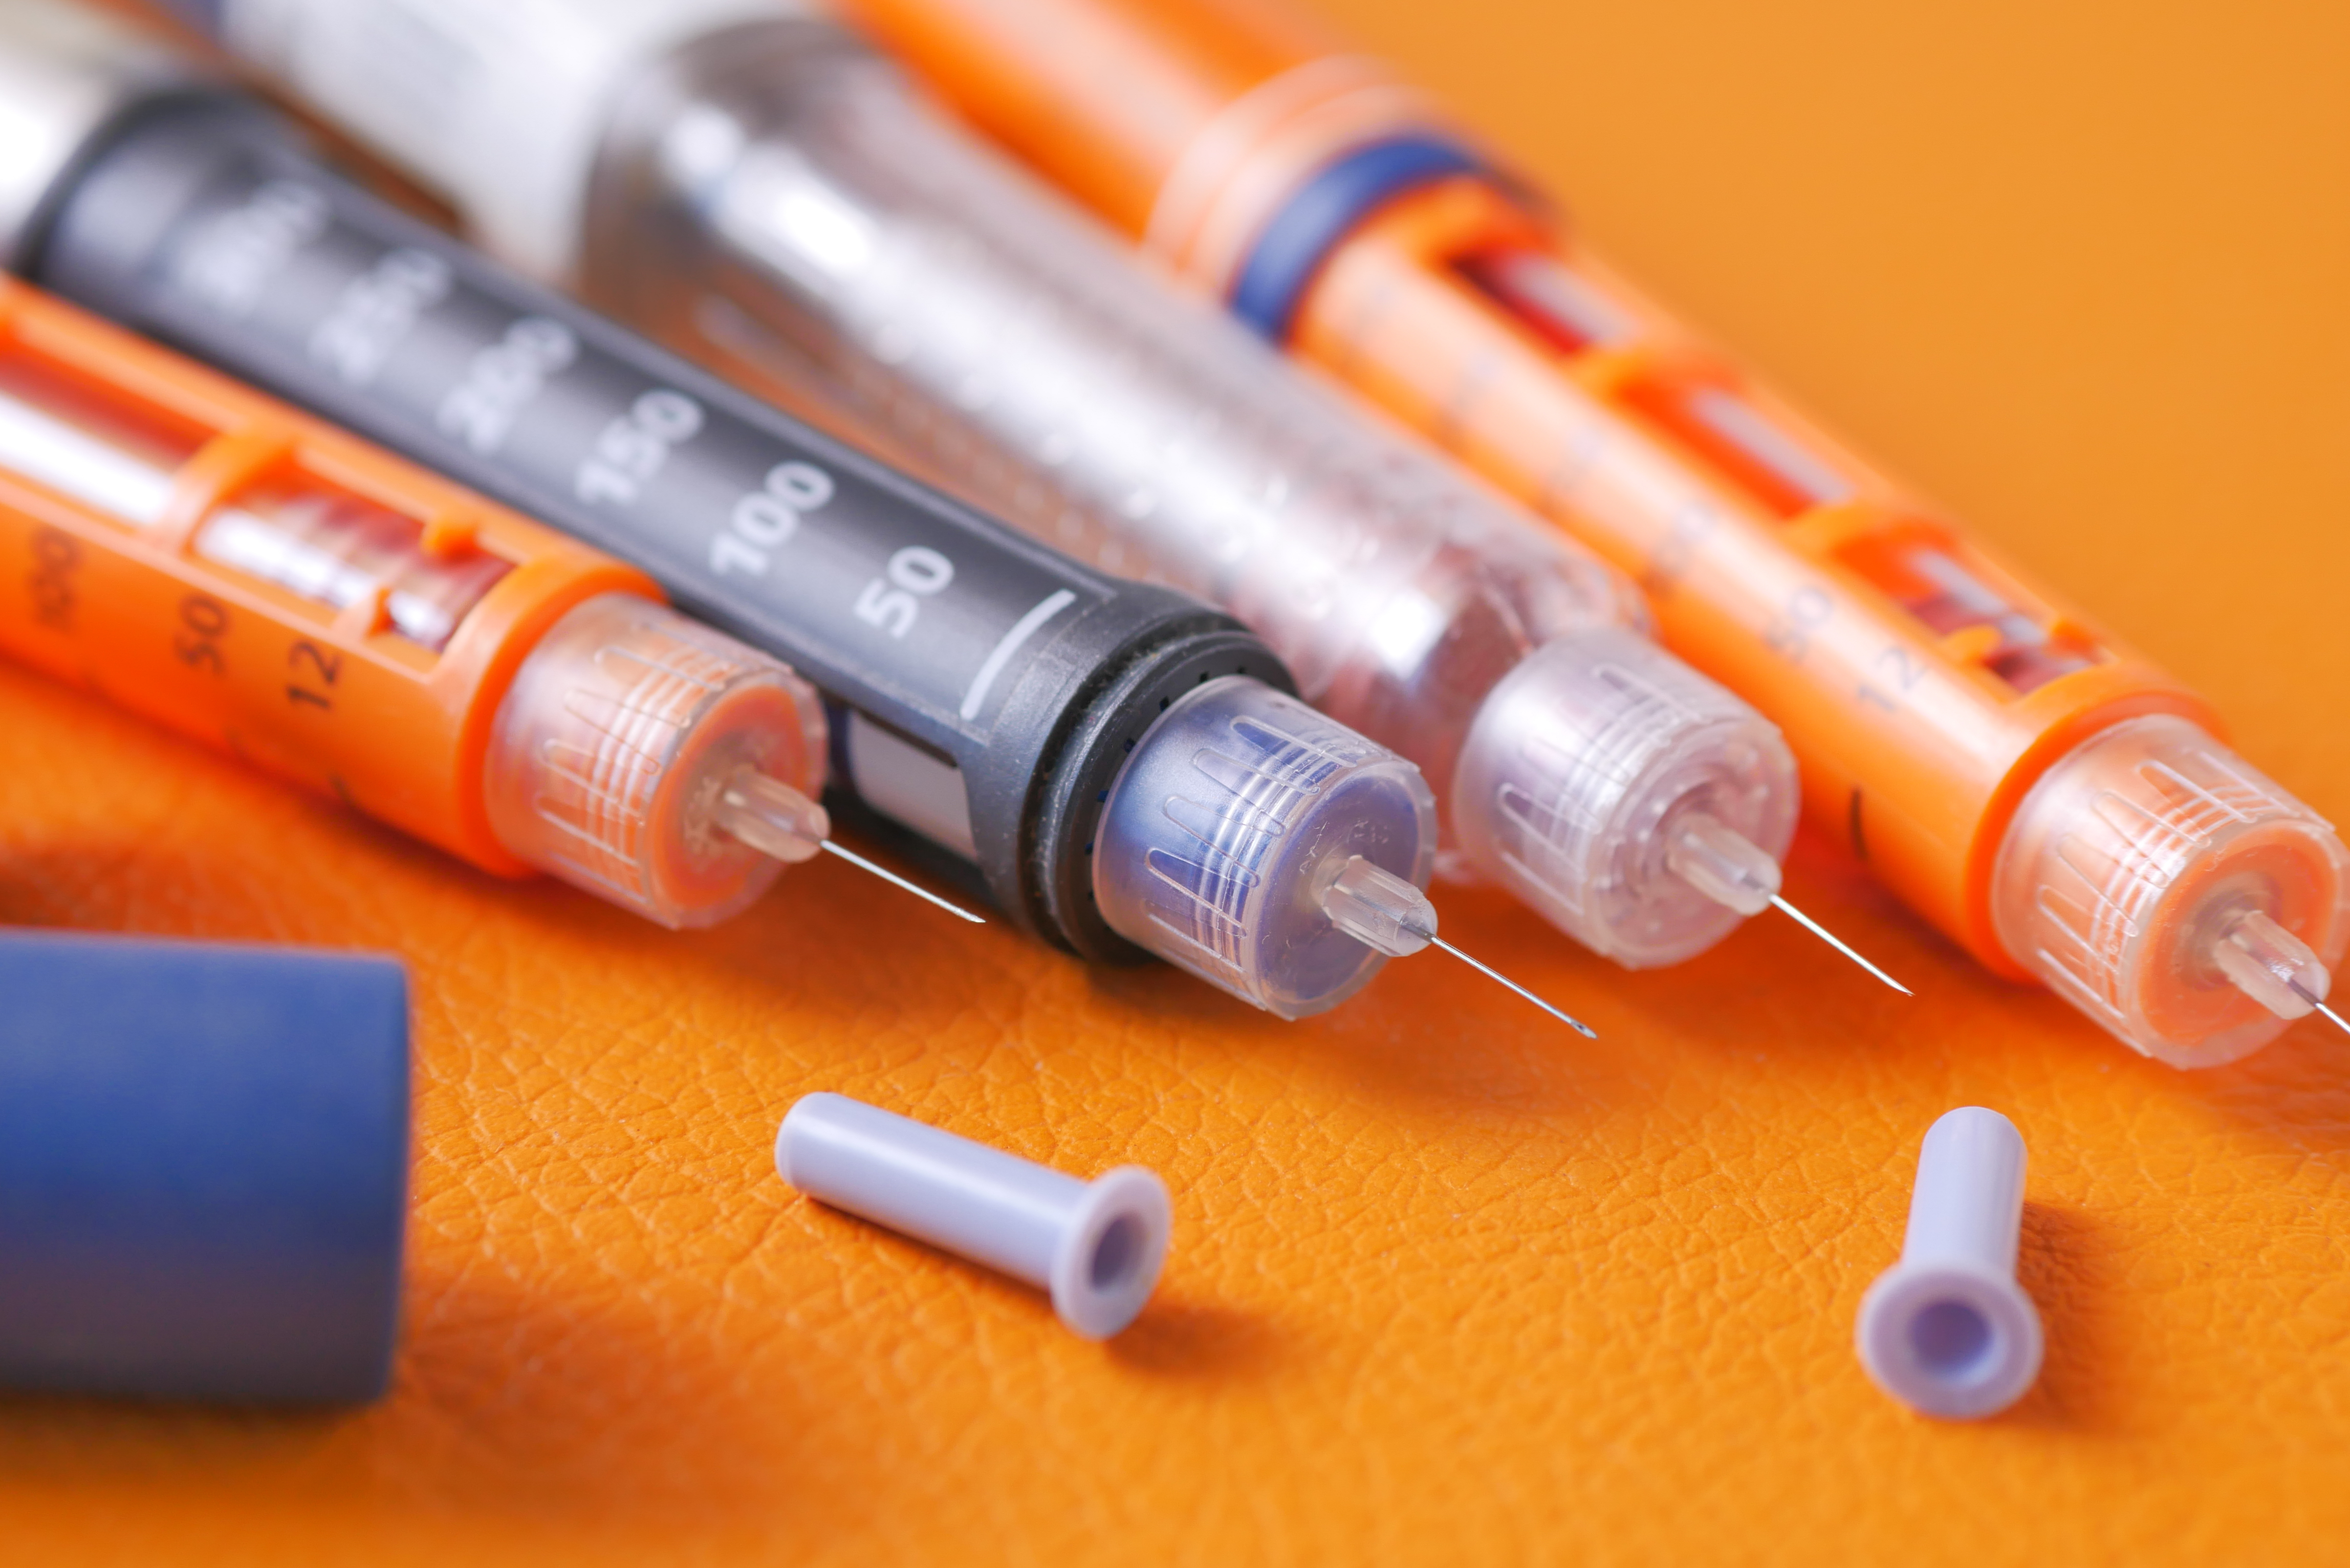 Insulin pens on orange background, close up